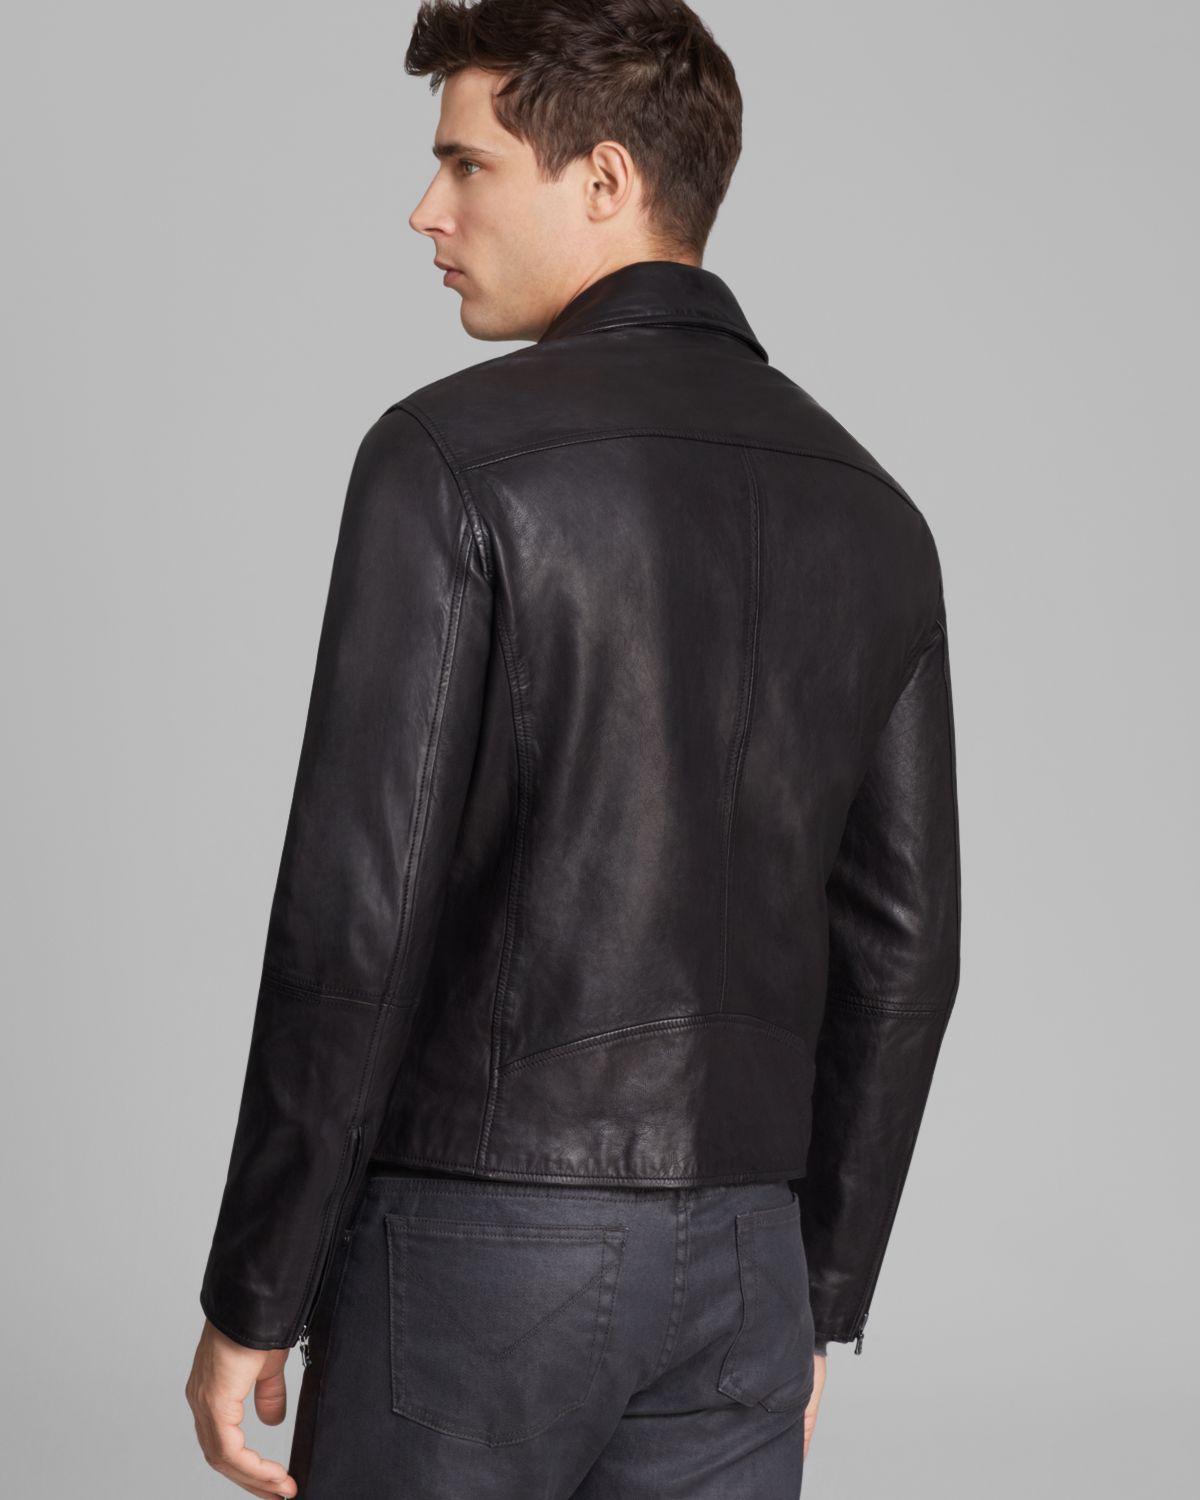 John Varvatos Luxe Leather Moto Jacket in Black for Men - Lyst